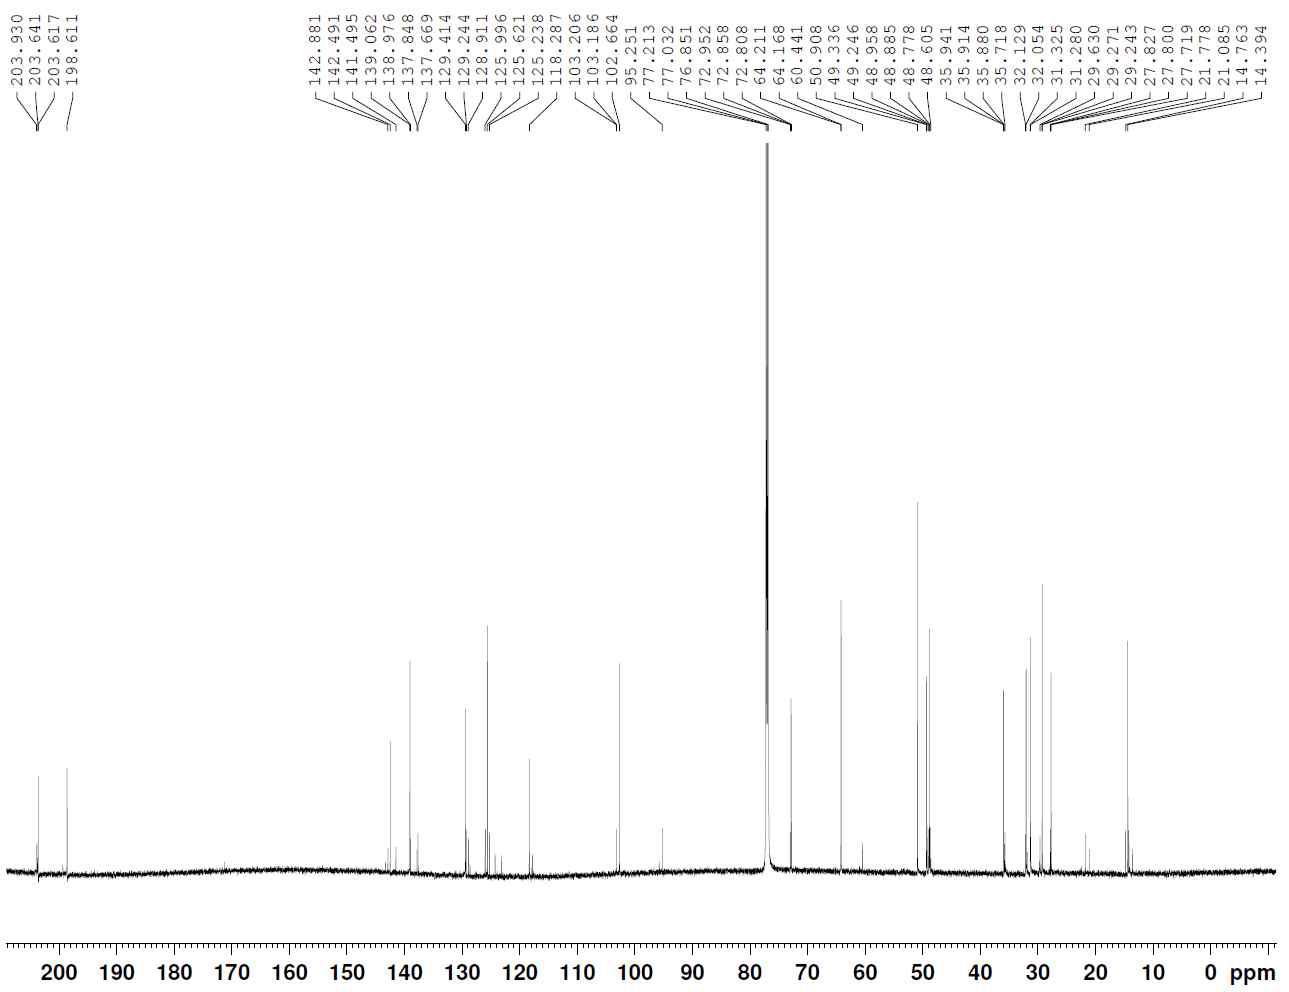 13C-NMR spectrum of compound 18